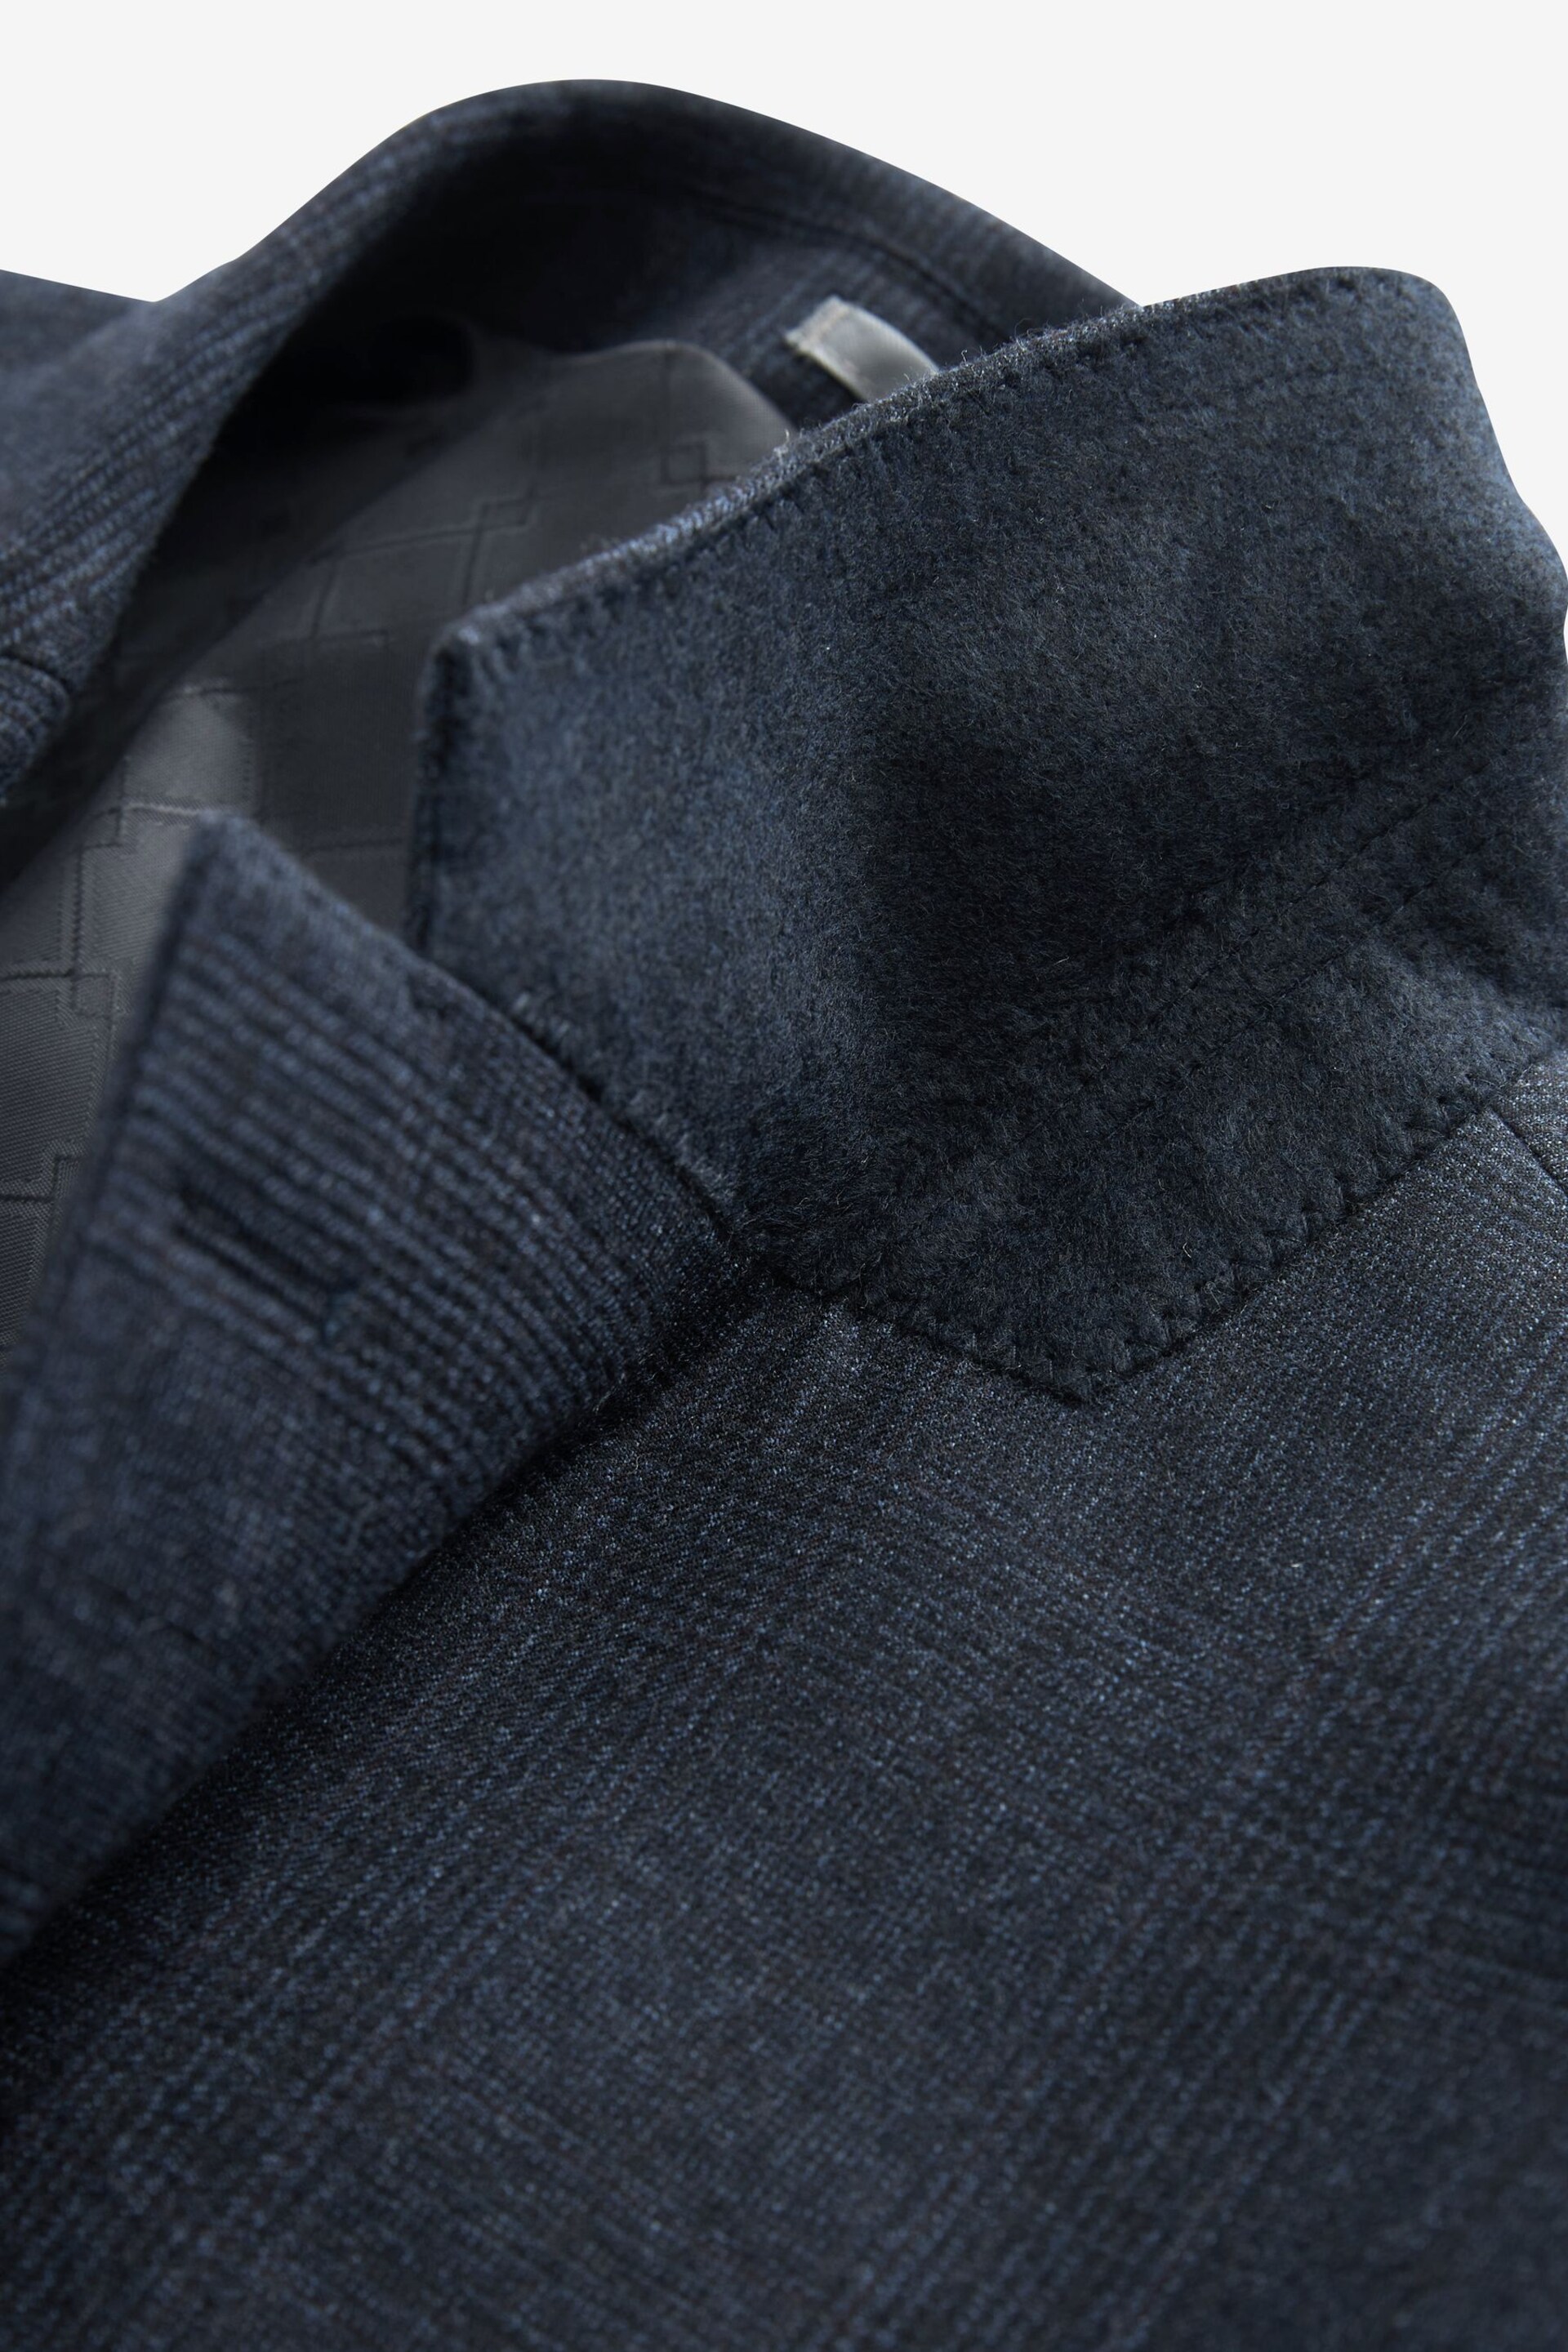 Navy Blue Slim Fit Signature Cerruti Wool Check Suit Jacket - Image 9 of 12